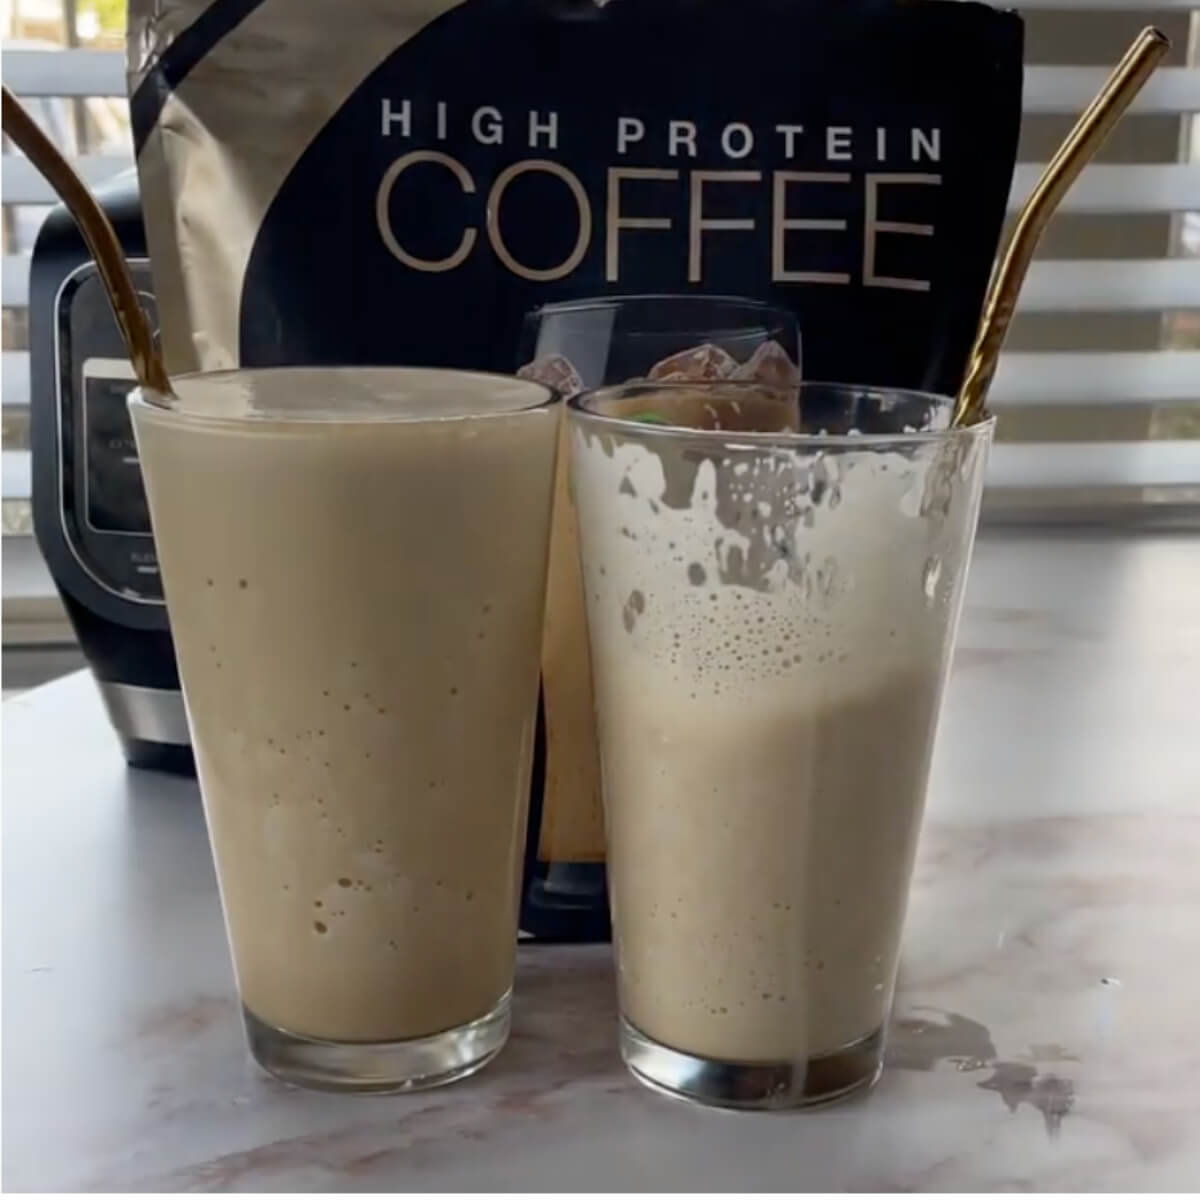 Two protein vanilla milkshakes in glass cups